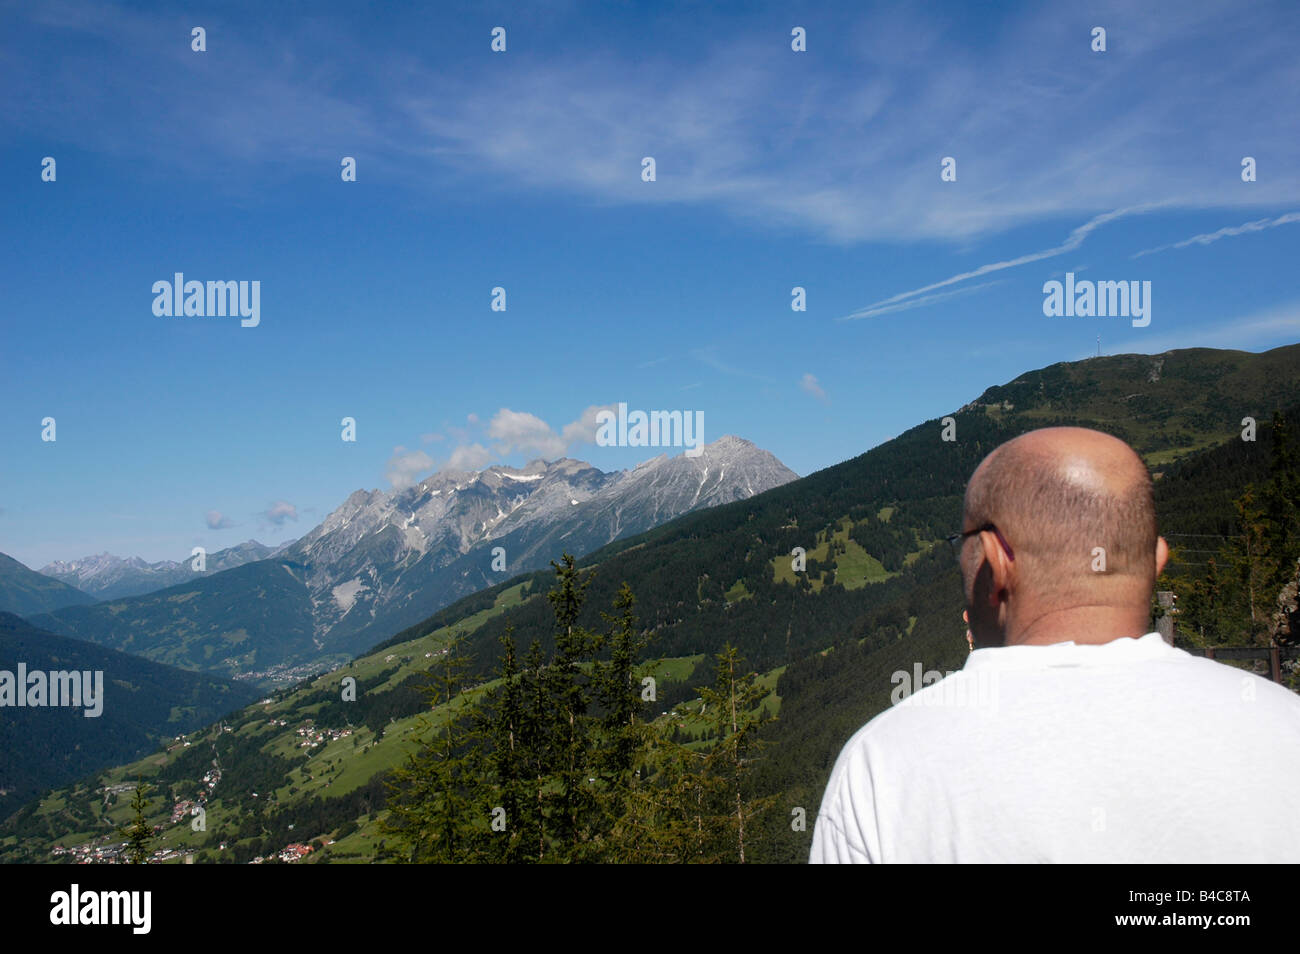 Austria Tyrol Landeck District Kaunertal valley overlooking Jerzens im Pitztal tourists admiring the view Stock Photo